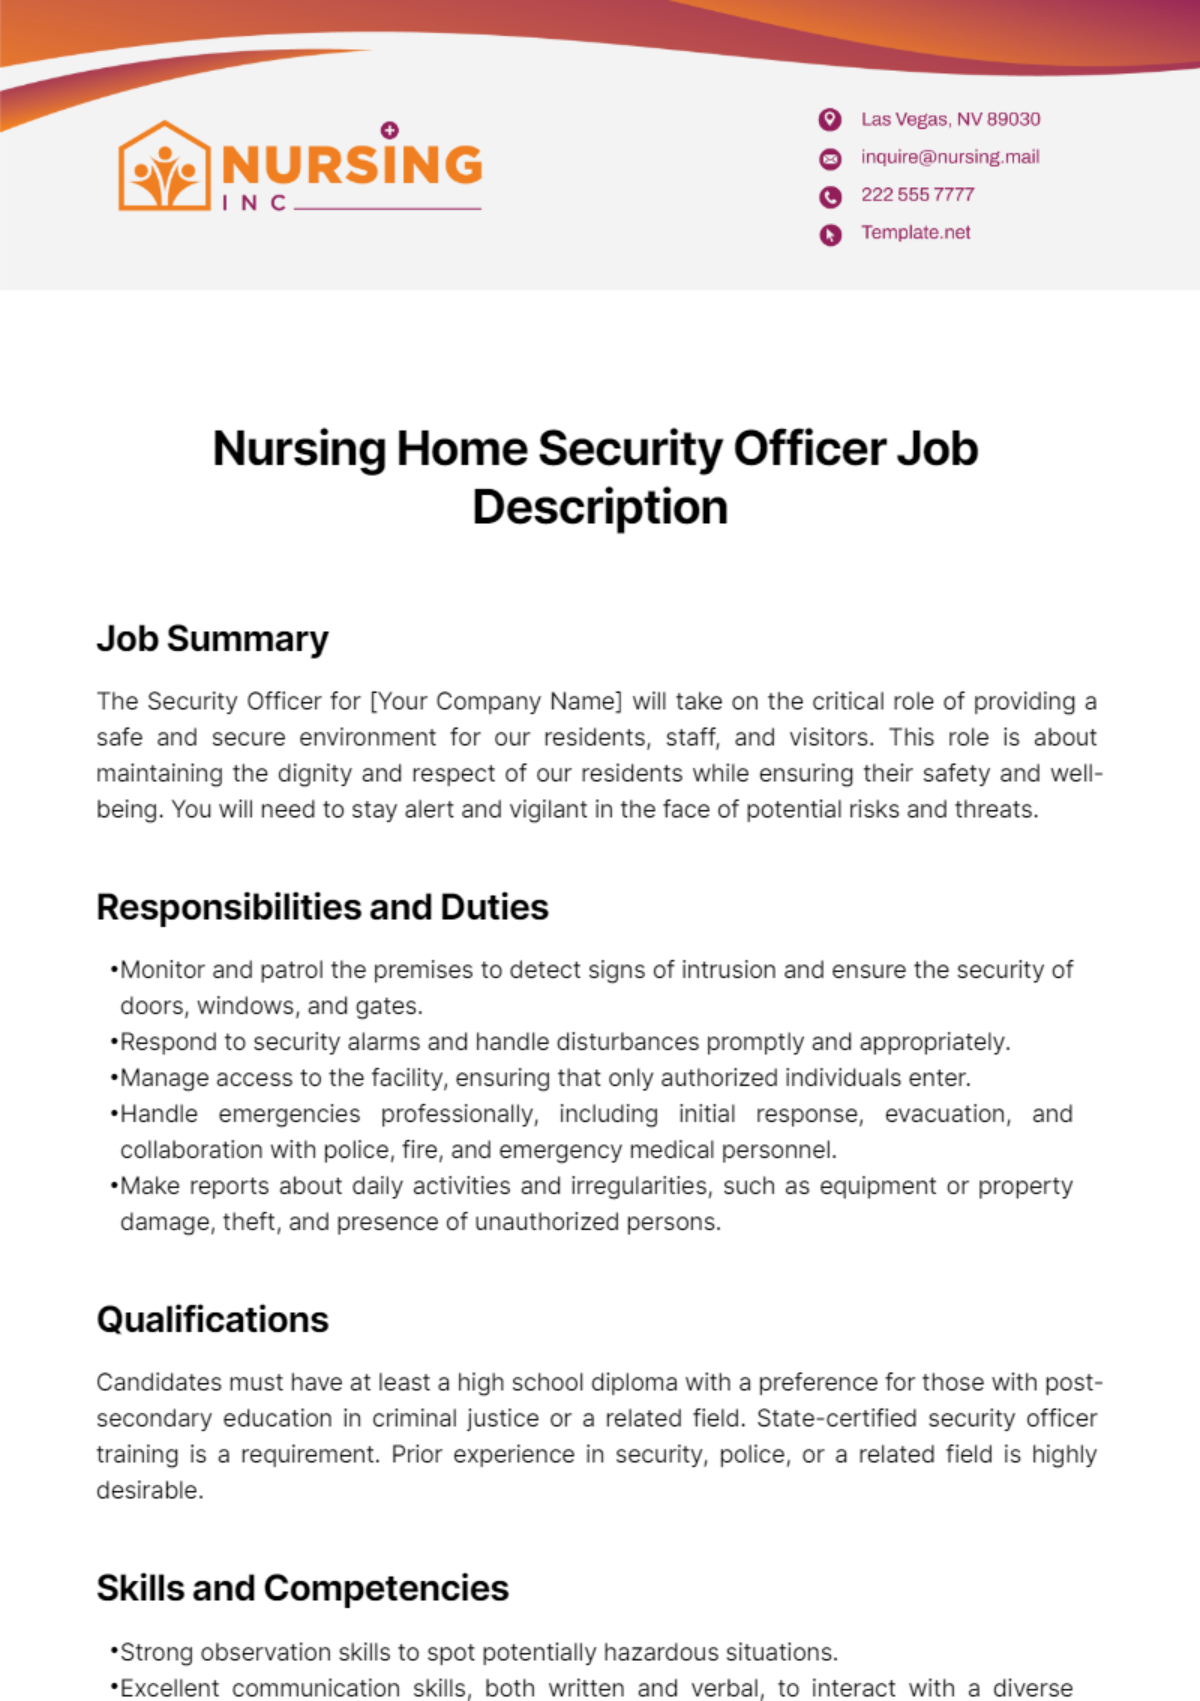 Nursing Home Security Officer Job Description Template